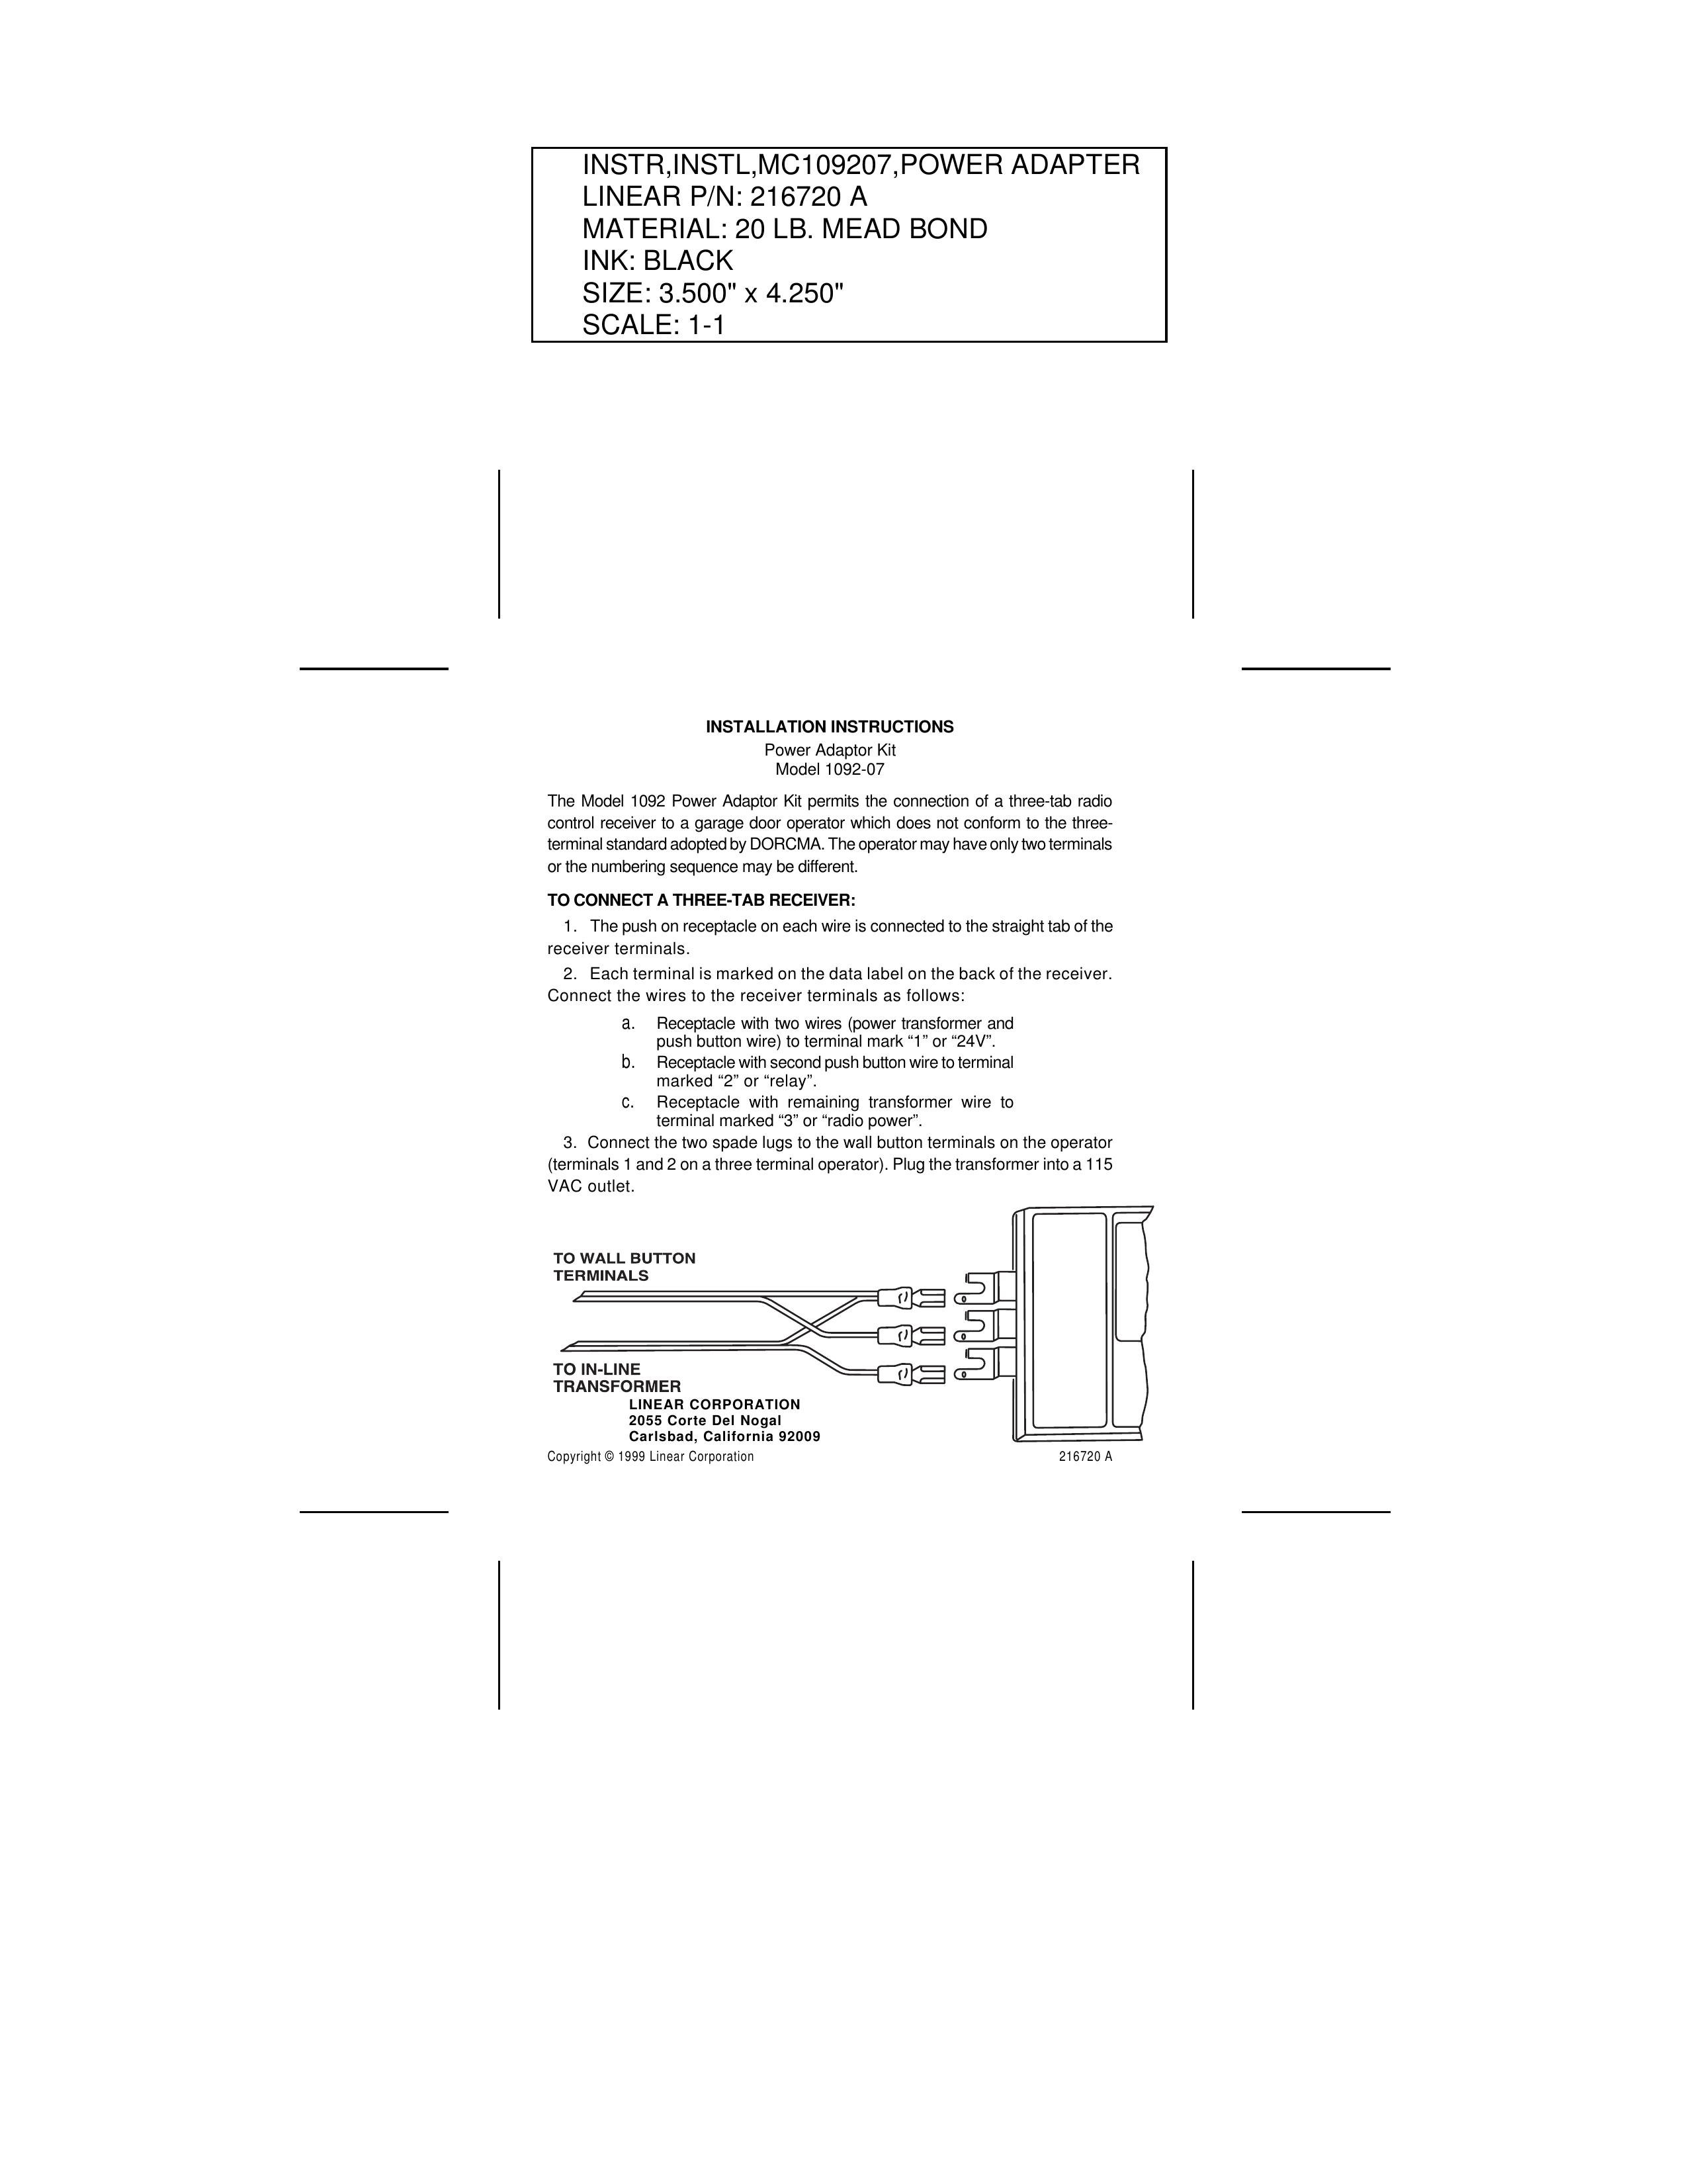 Linear 1092-07 Chipper User Manual